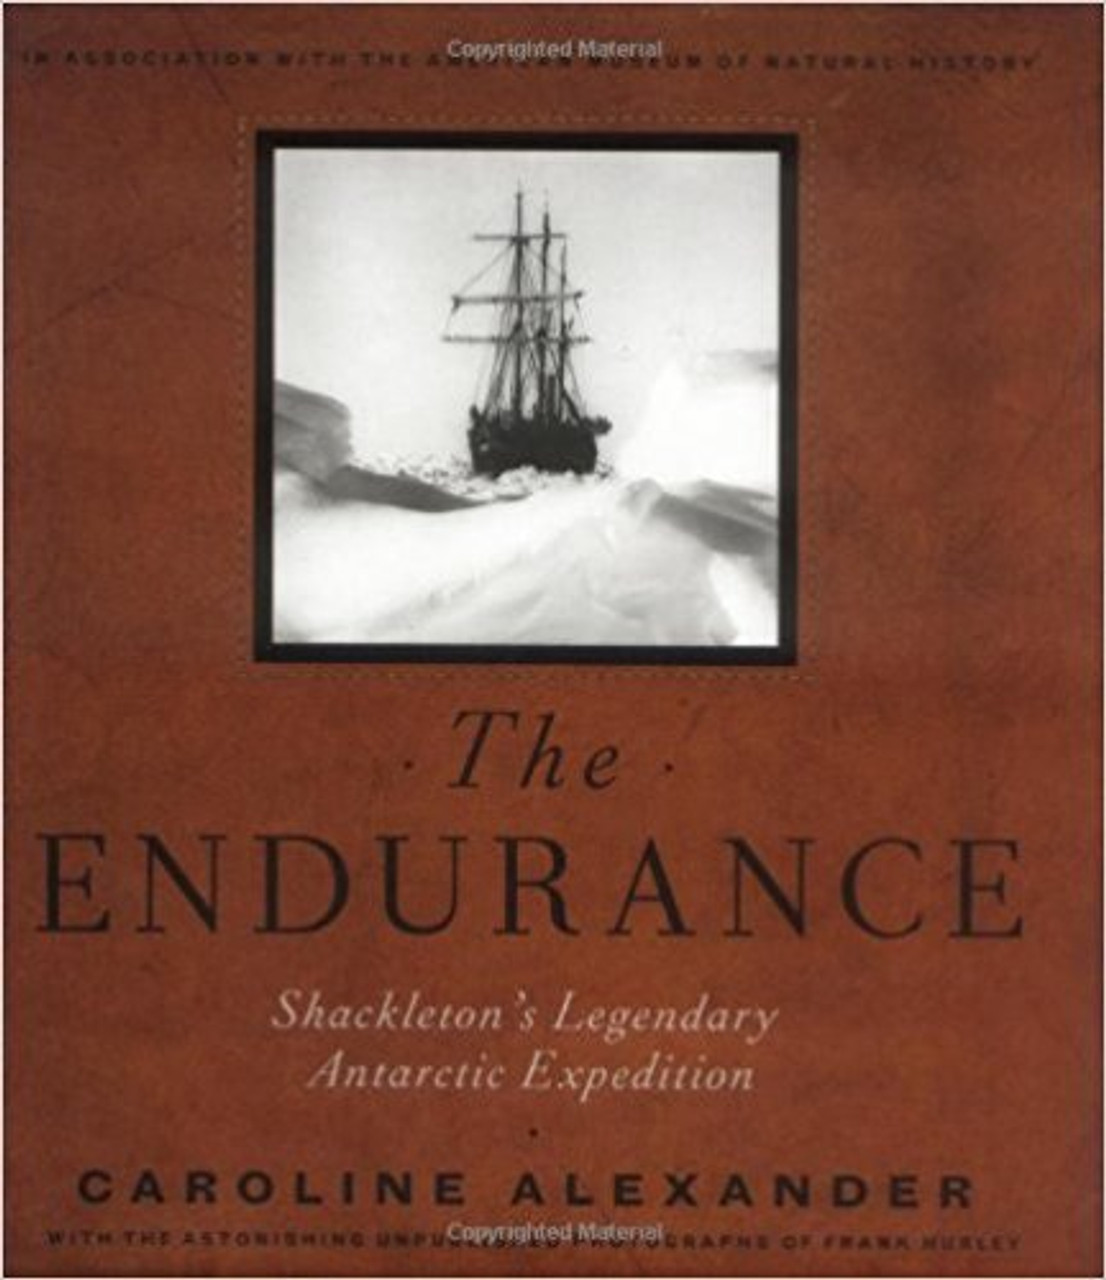 Endurance: Shackleton's Legendary Antarctic Expedition by Caroline Alexander